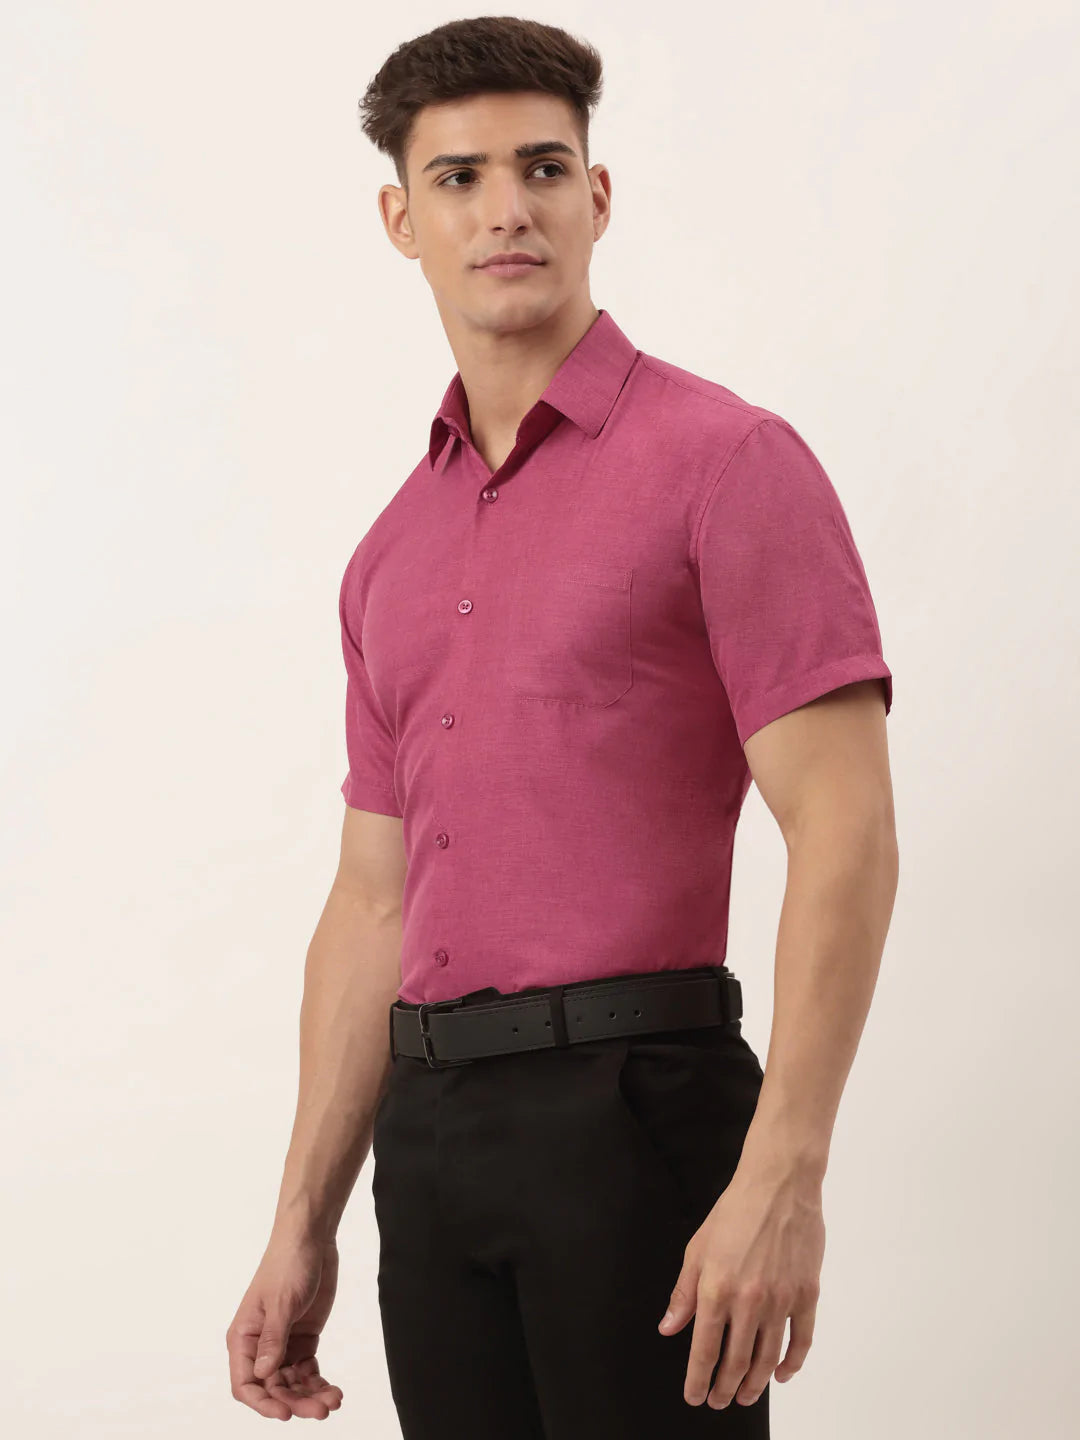 Jainish Men's Cotton Solid Half Sleeve Formal Shirts ( SF 811Pink )